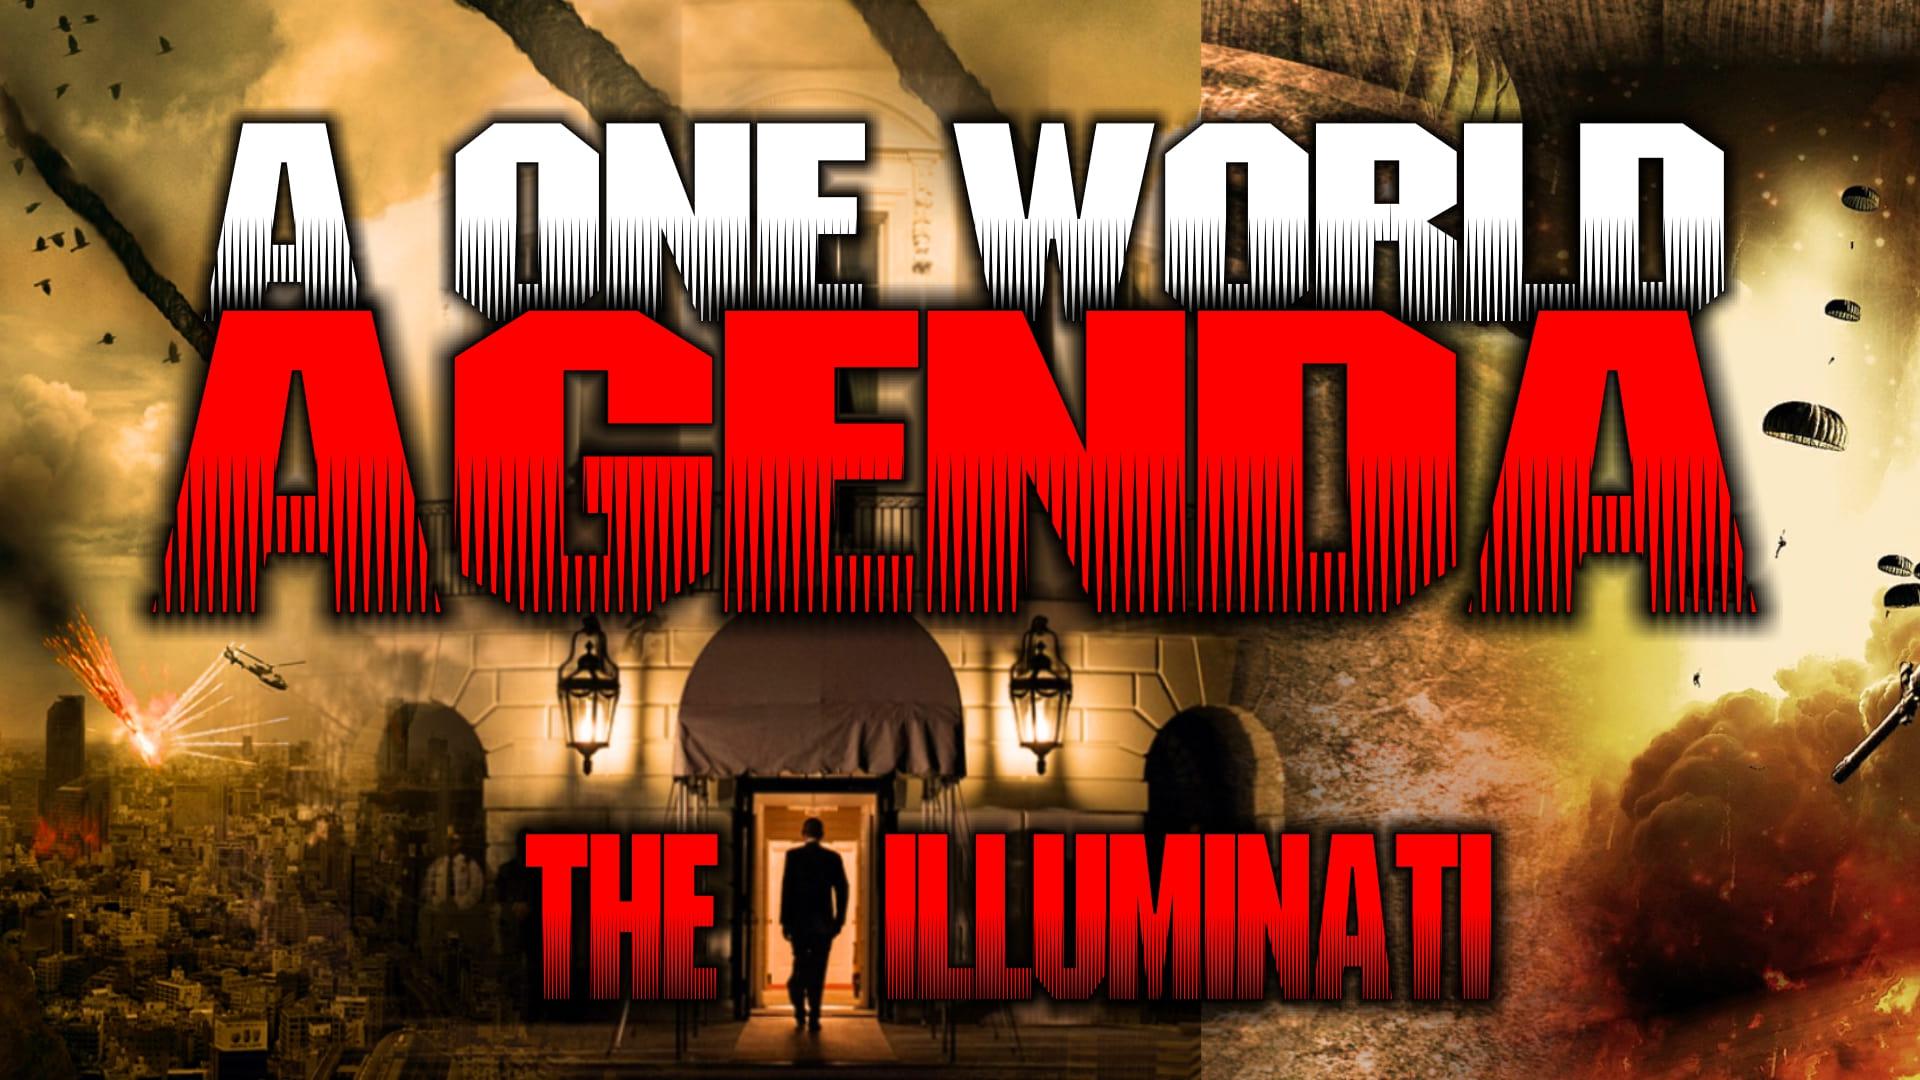 One World Agenda: The Illuminati backdrop